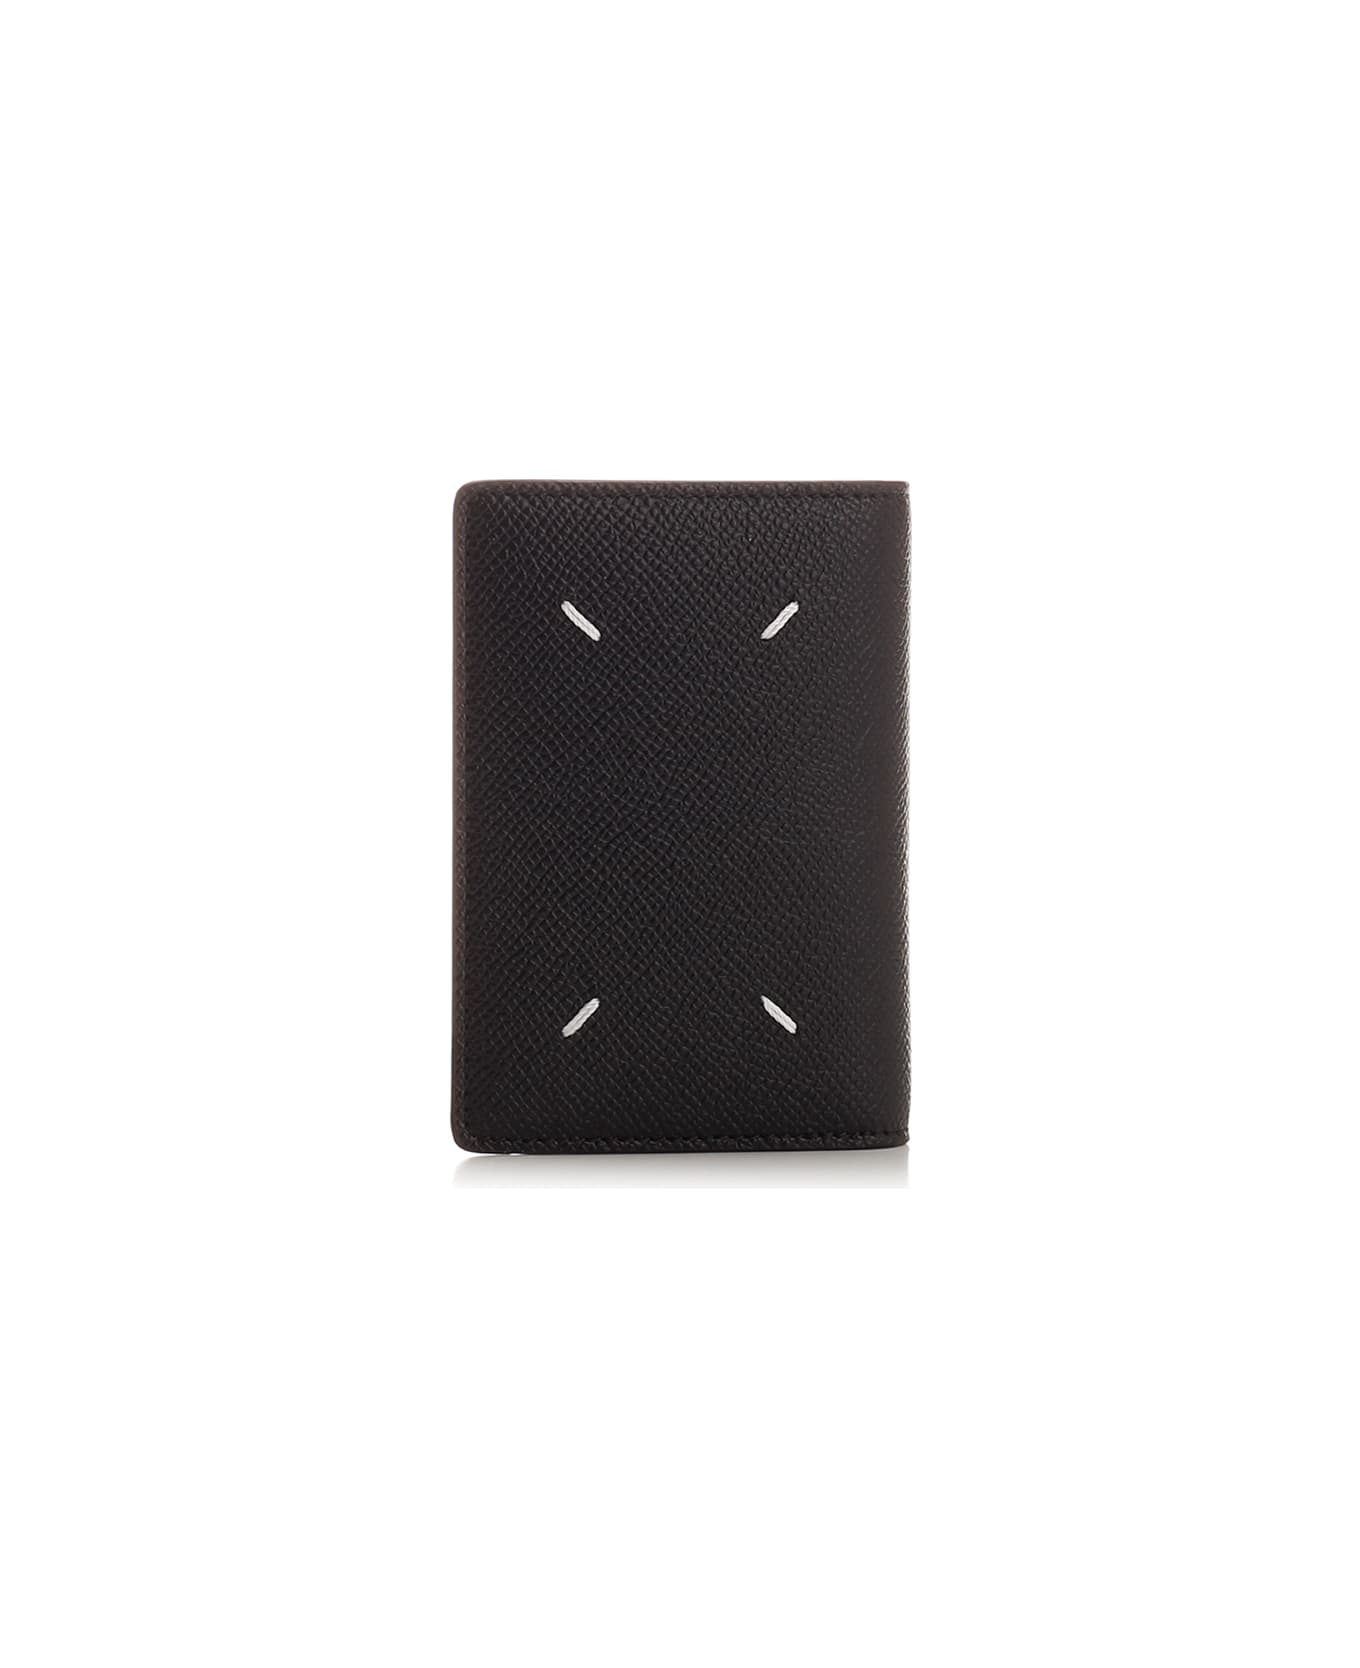 Maison Margiela Black Bifold Card Holder - Black 財布